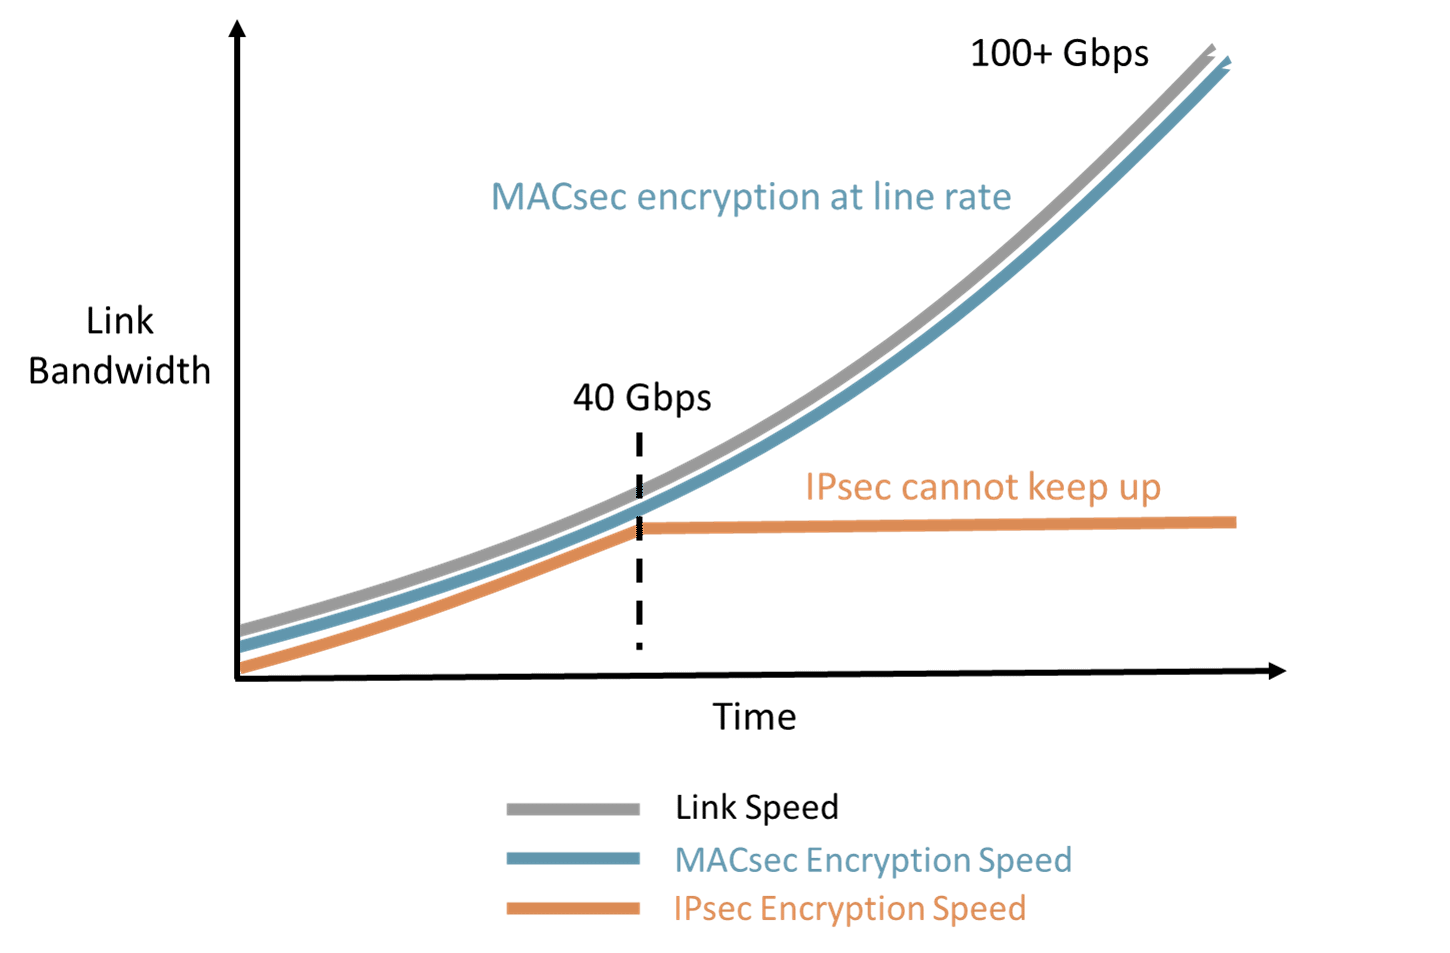 MACsec vs IPsec encryption performance